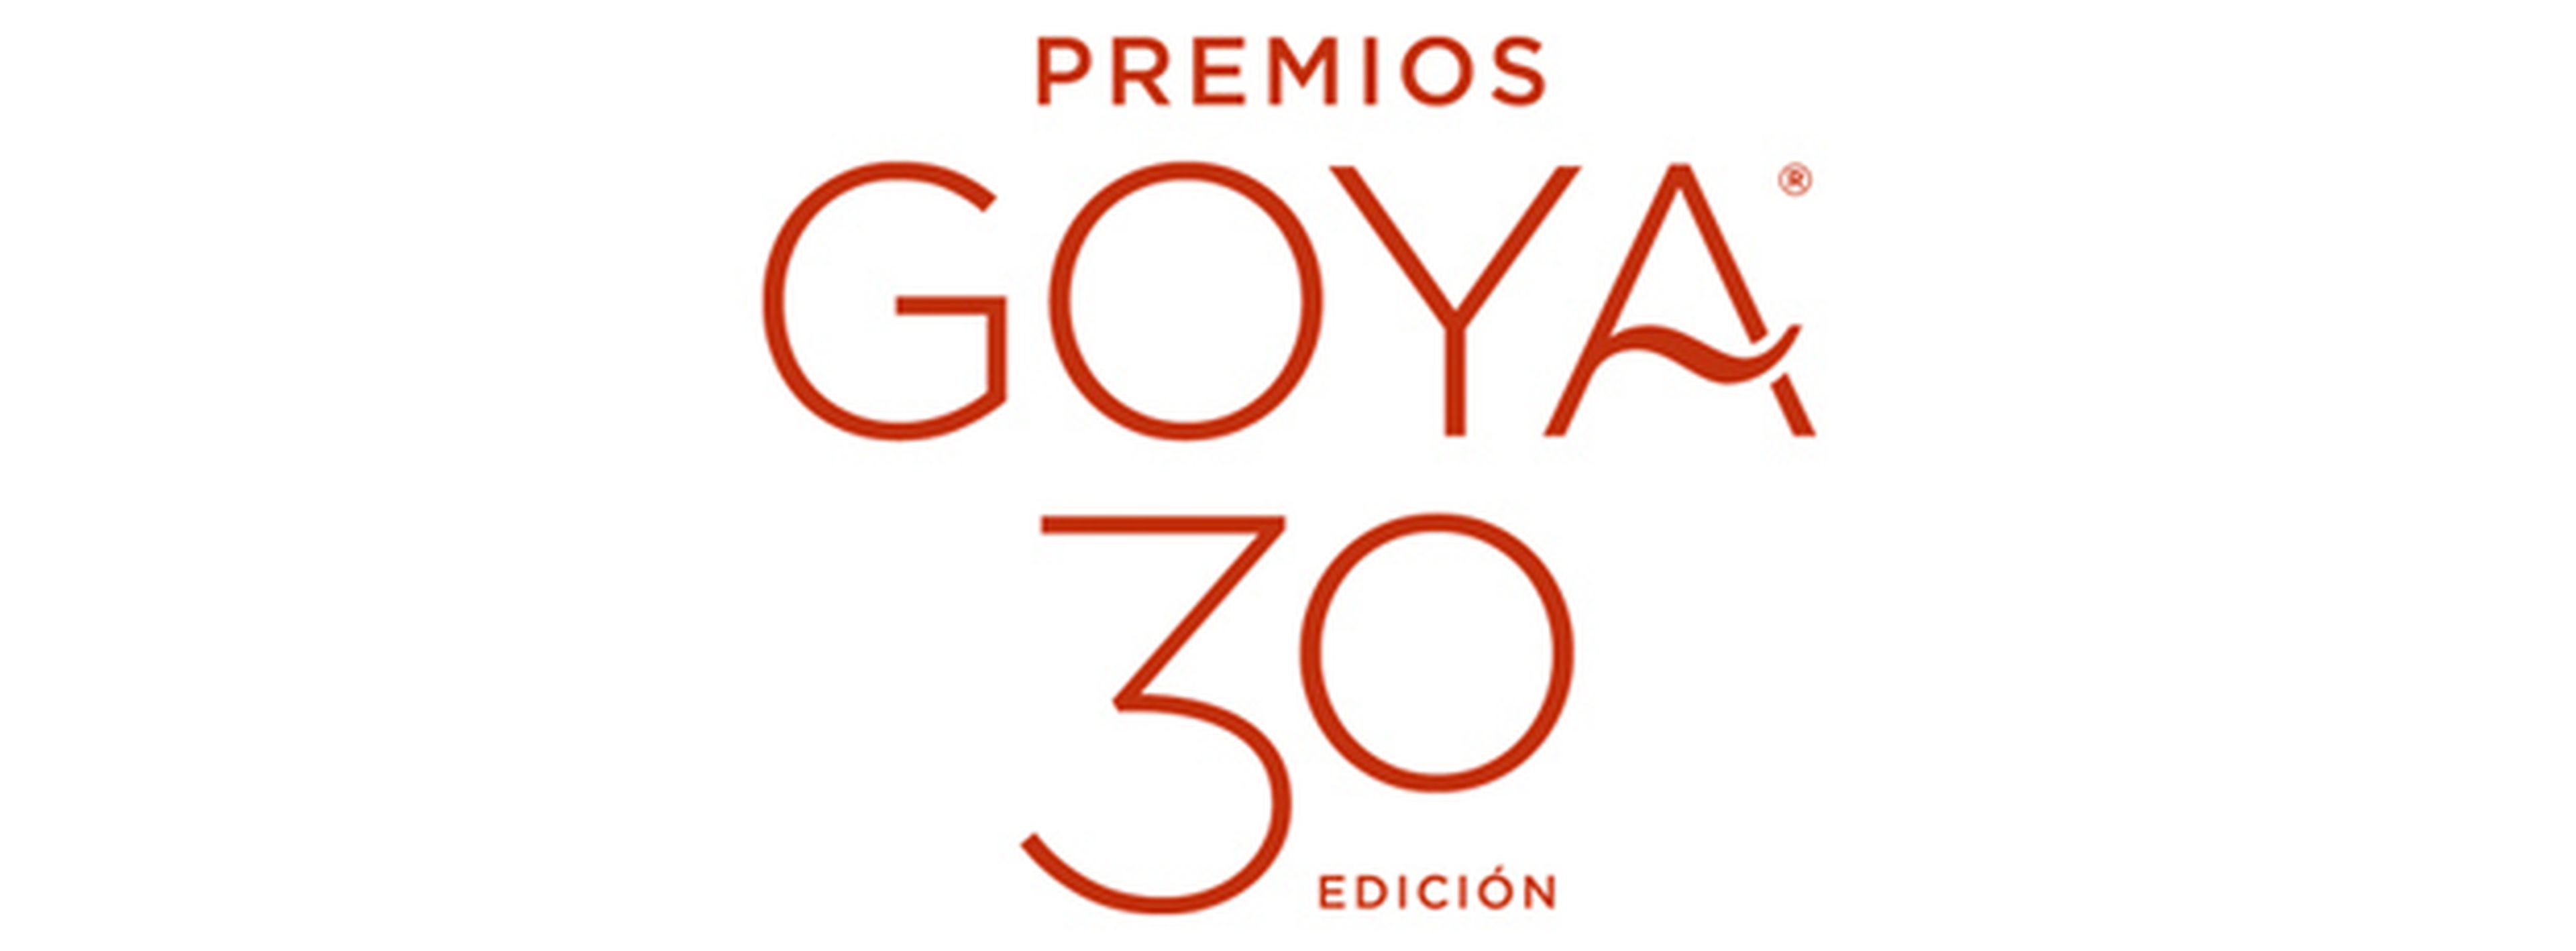 Premios Goya 2016 online